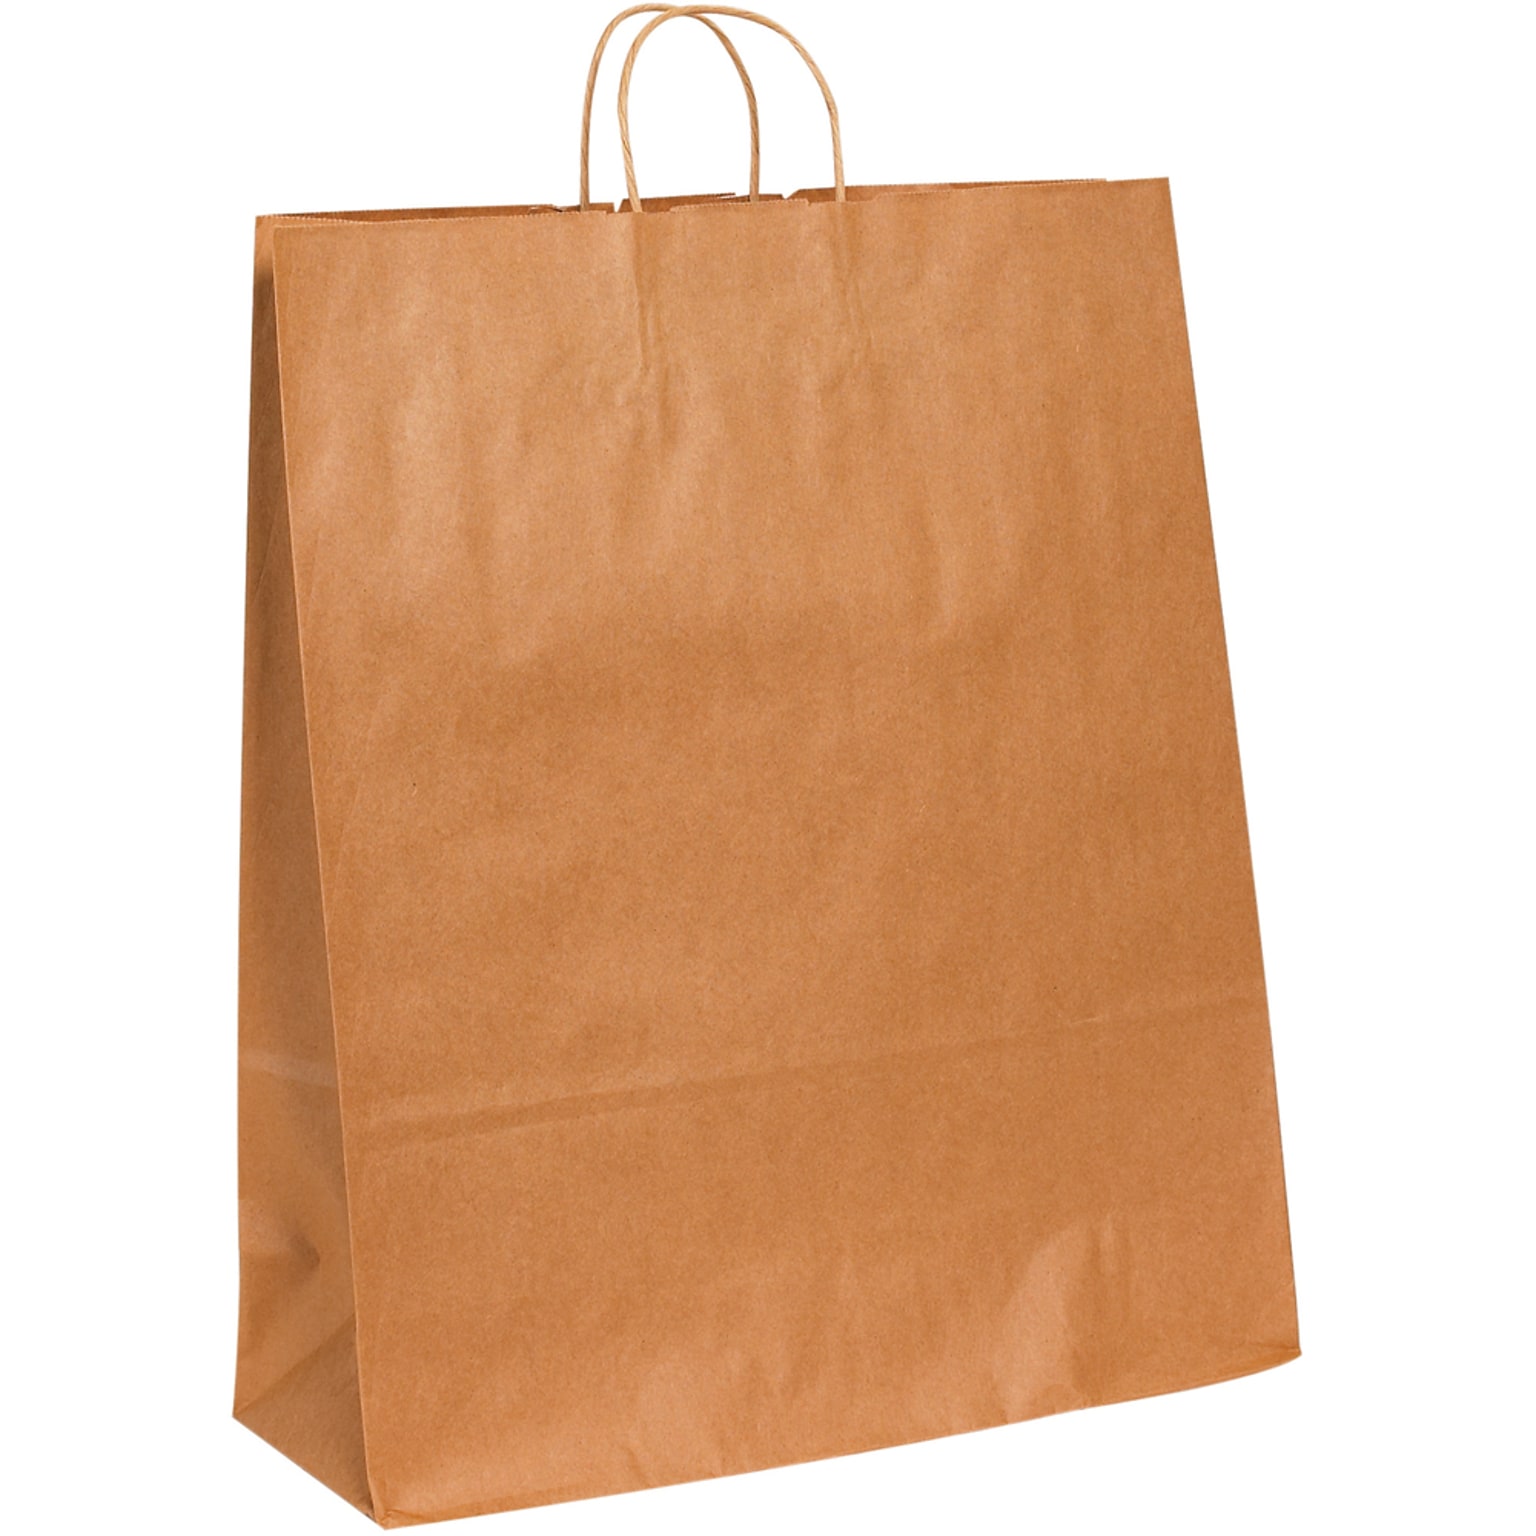 Staples 16 x 6 x 19 1/4 Shopping Bags, Kraft, 200/Carton (BGS110K)